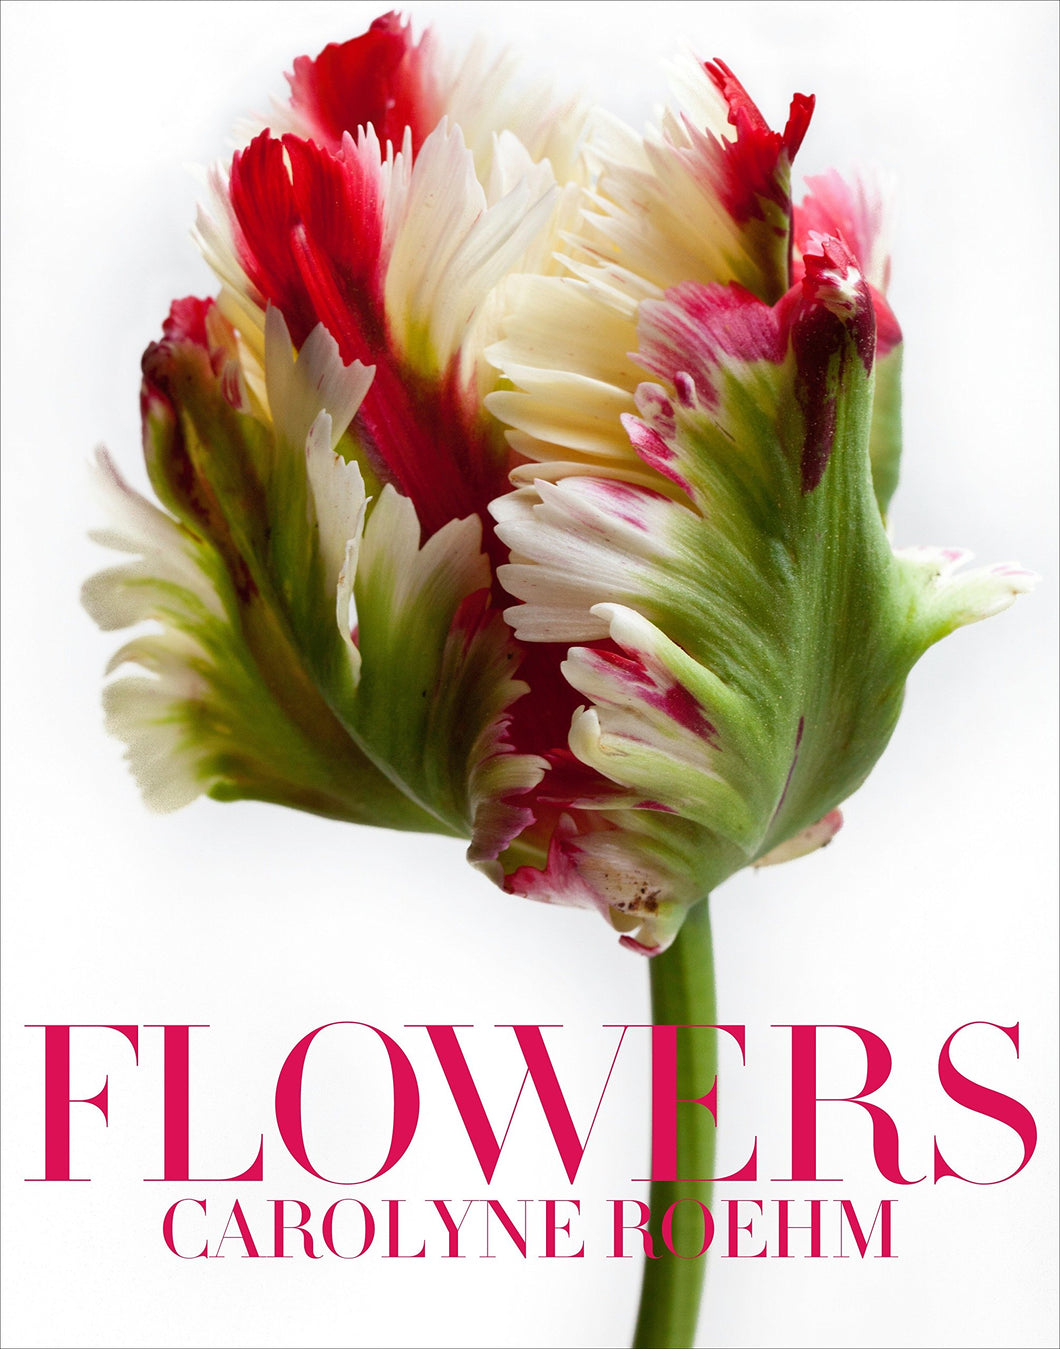 Flowers by Carolyn Roehm